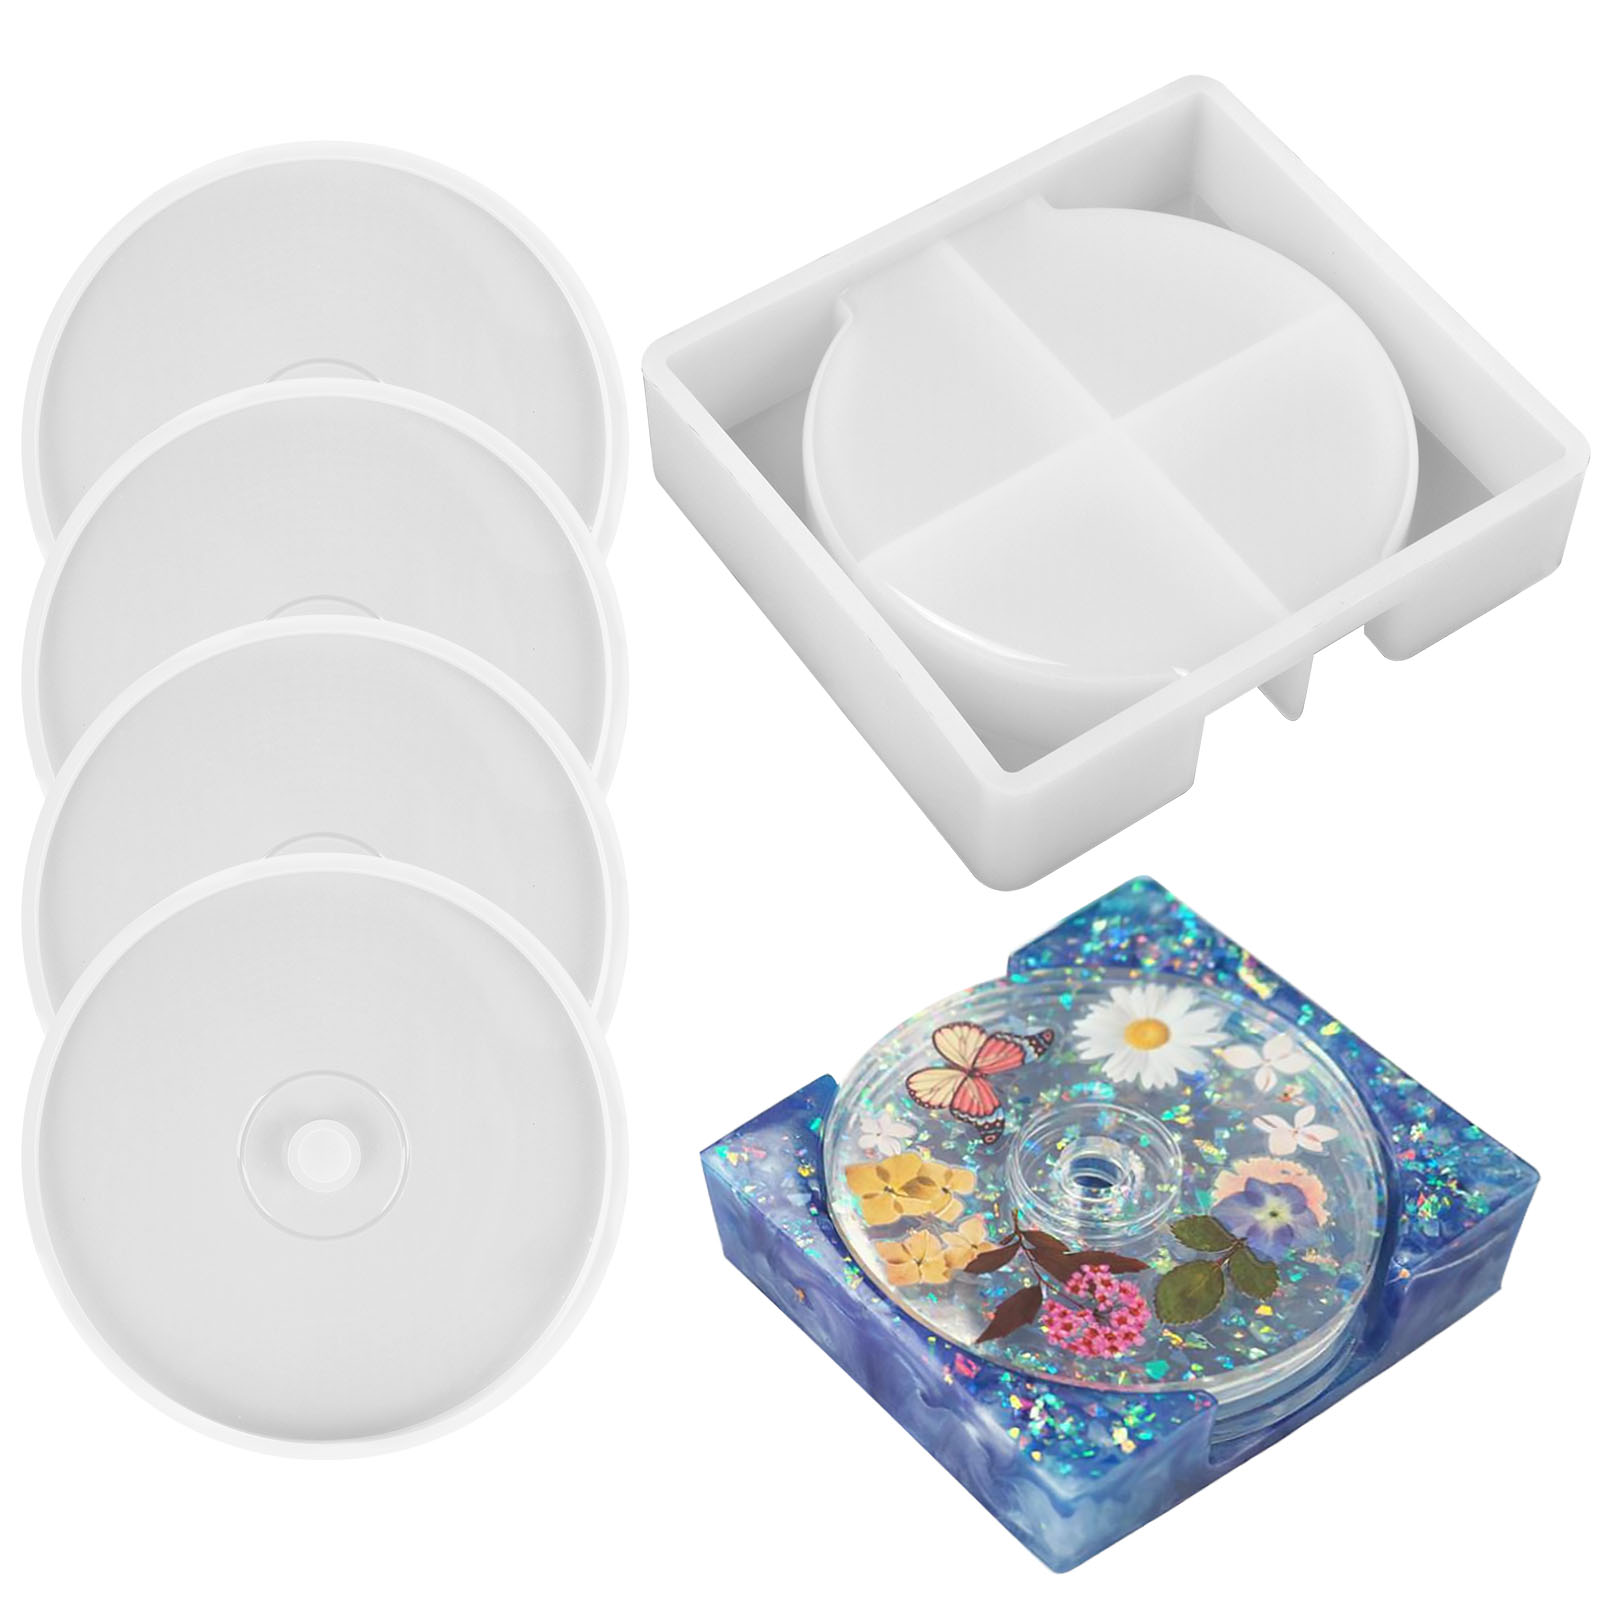 Honeycomb Coaster Resin Molds Set, 4Pcs Coaster Silicone Molds for Epoxy  Resin with Storage Box Mold, Coaster Molds for Resin Ca - AliExpress